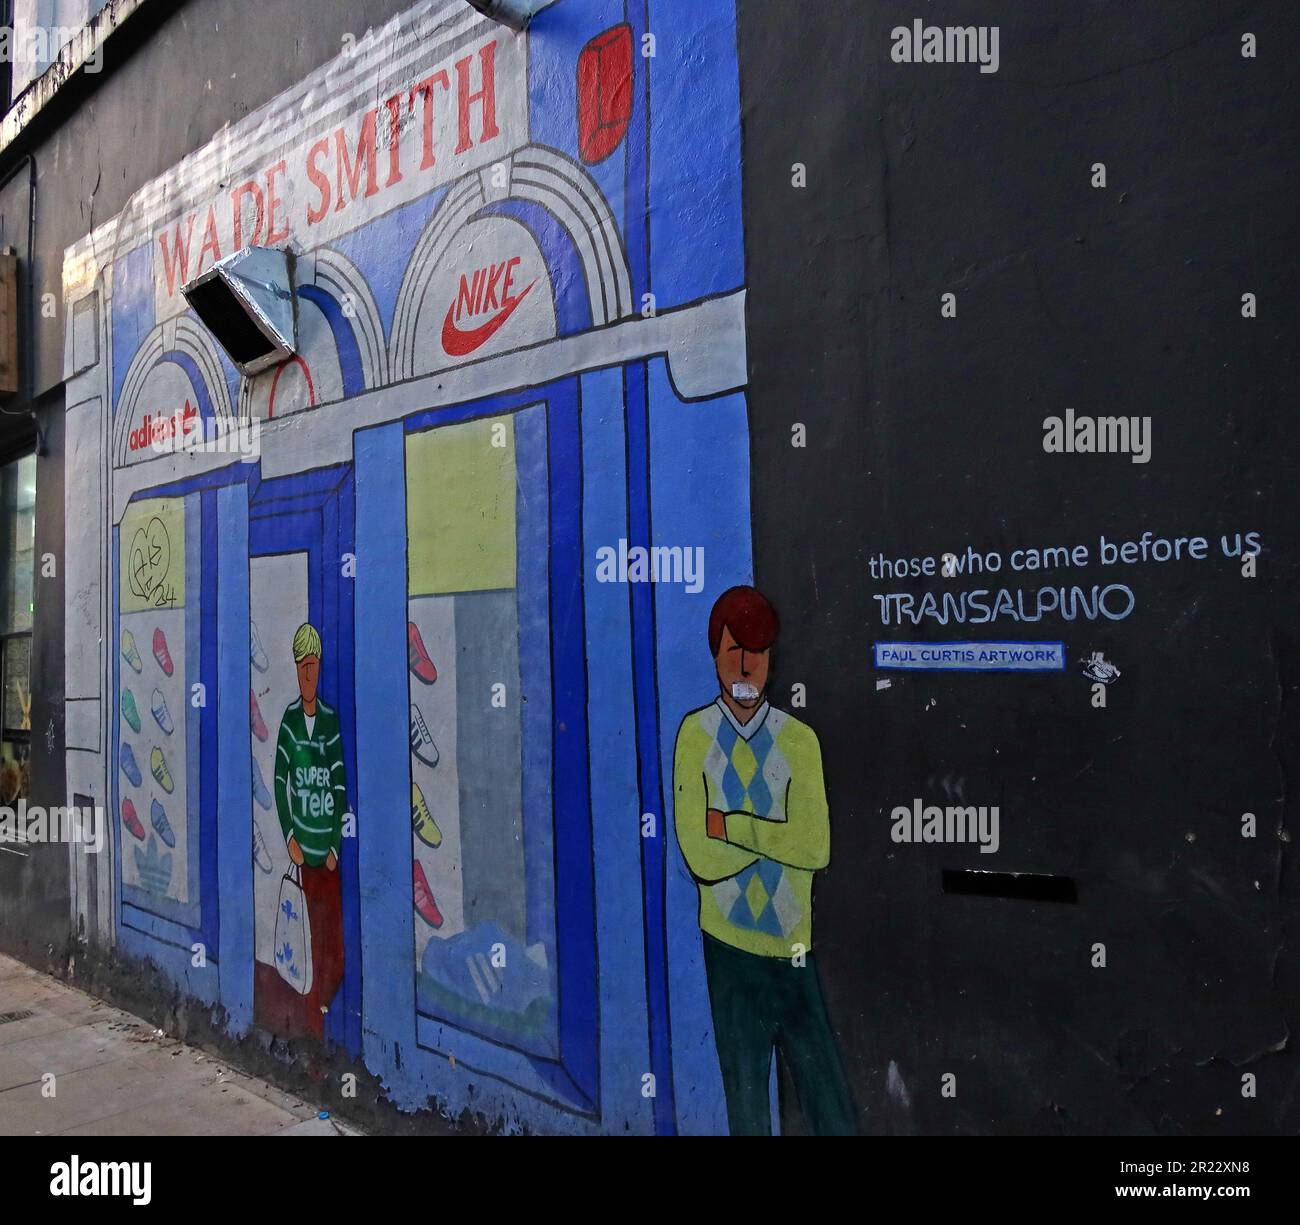 Wade Smith, Adidas Nike - Transalpino - Paul Curtis artwork mural, Ropewalks, Liverpool, Merseyside, England, UK, L1 4EZ Stock Photo